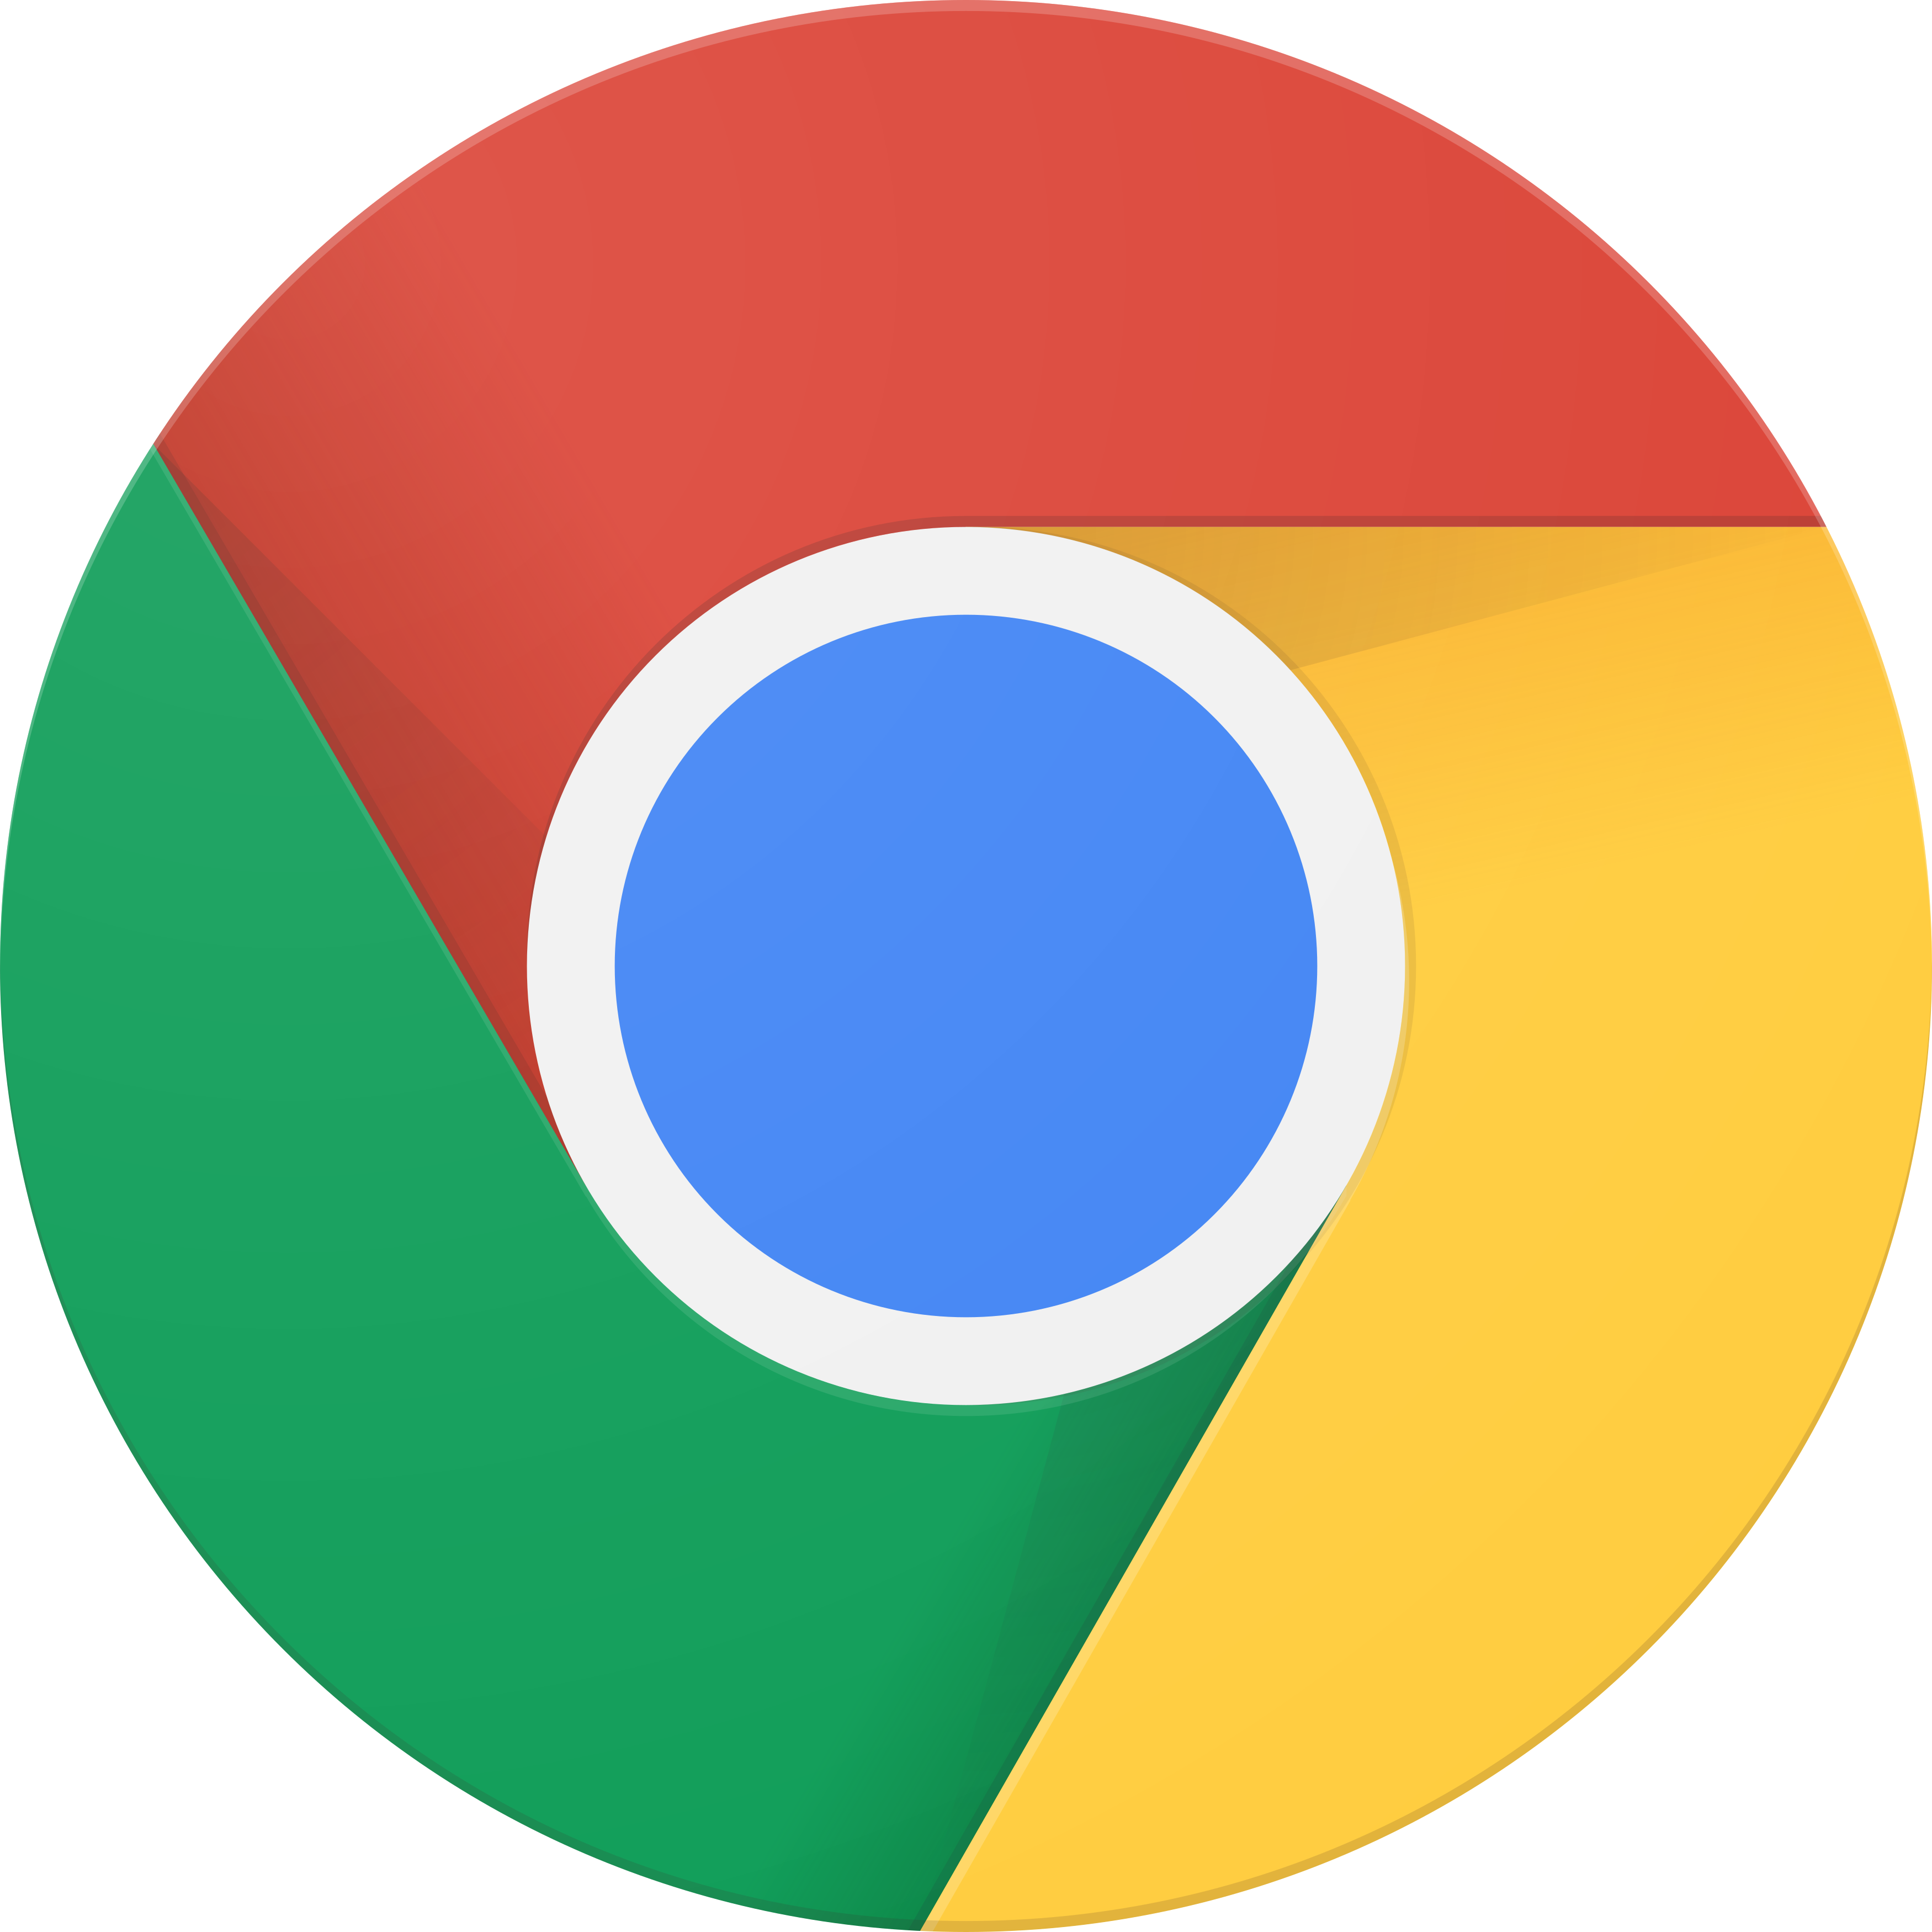 Download PNG image - Official Google Chrome Logo Transparent Background 